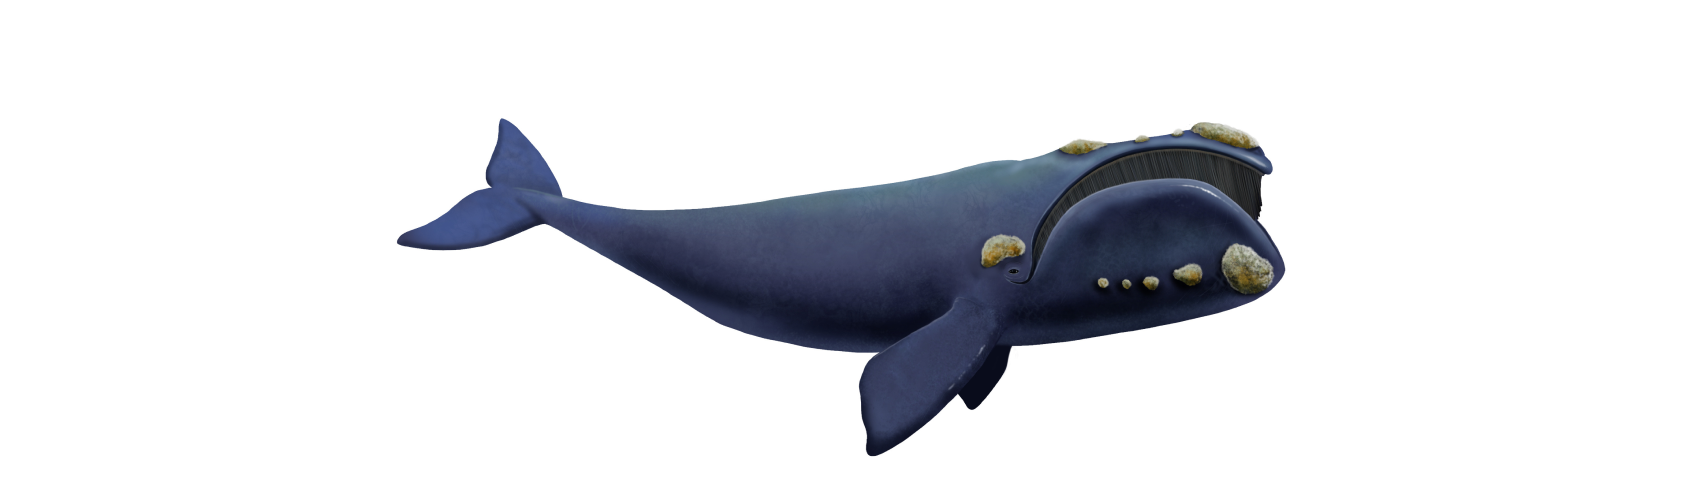 The Right Whale, state marine mammal of Massachusetts